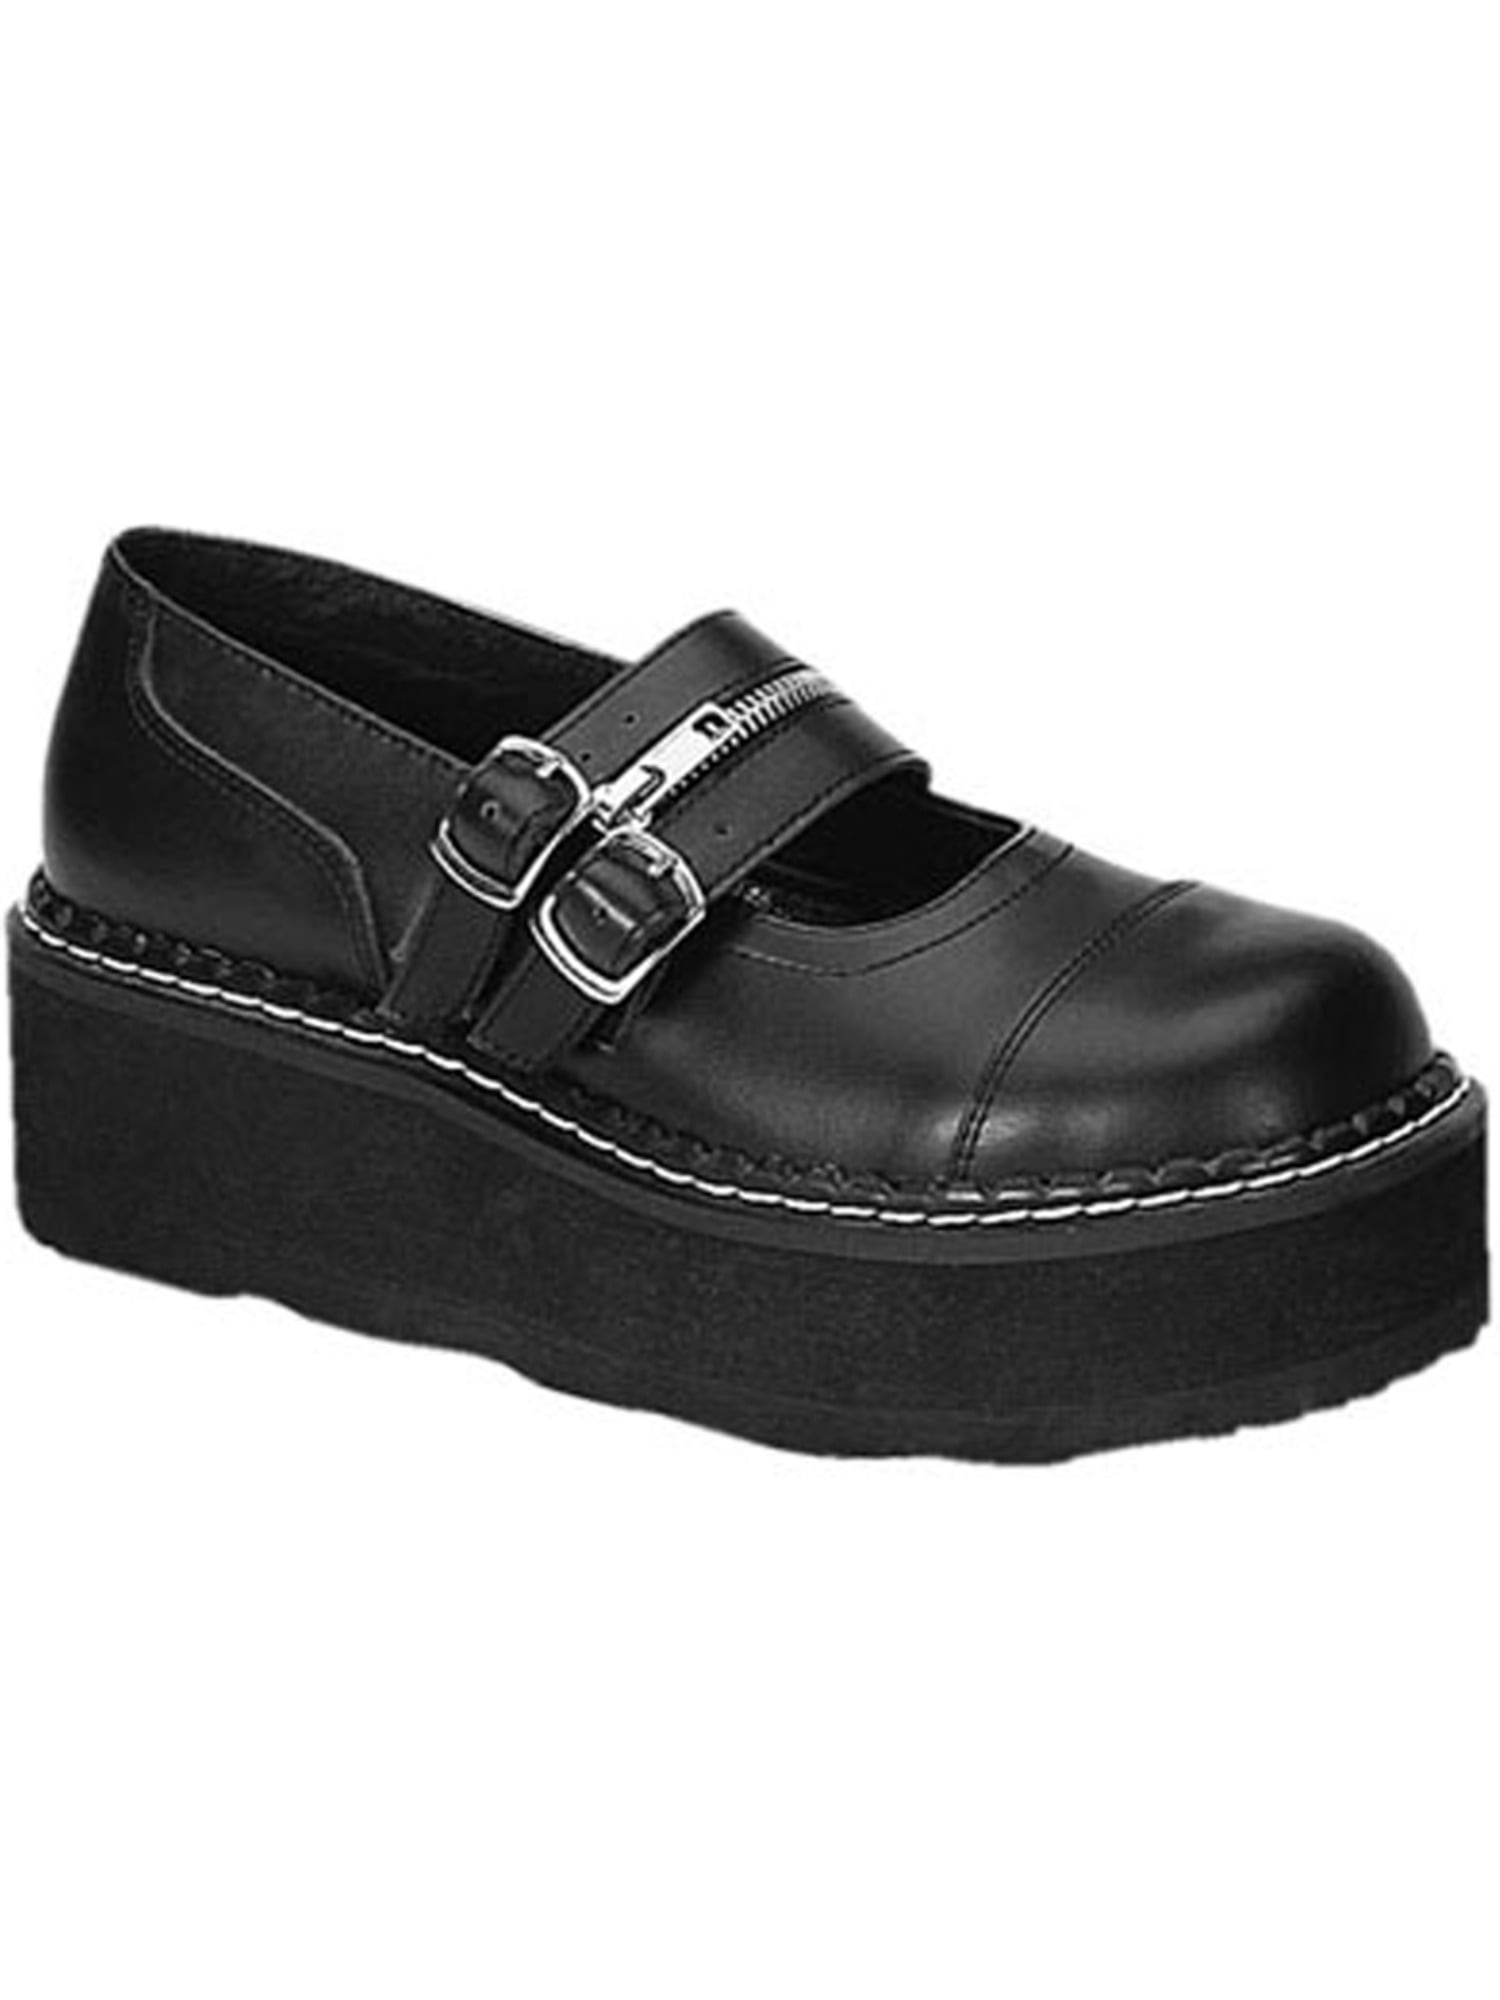 cute black shoes womens